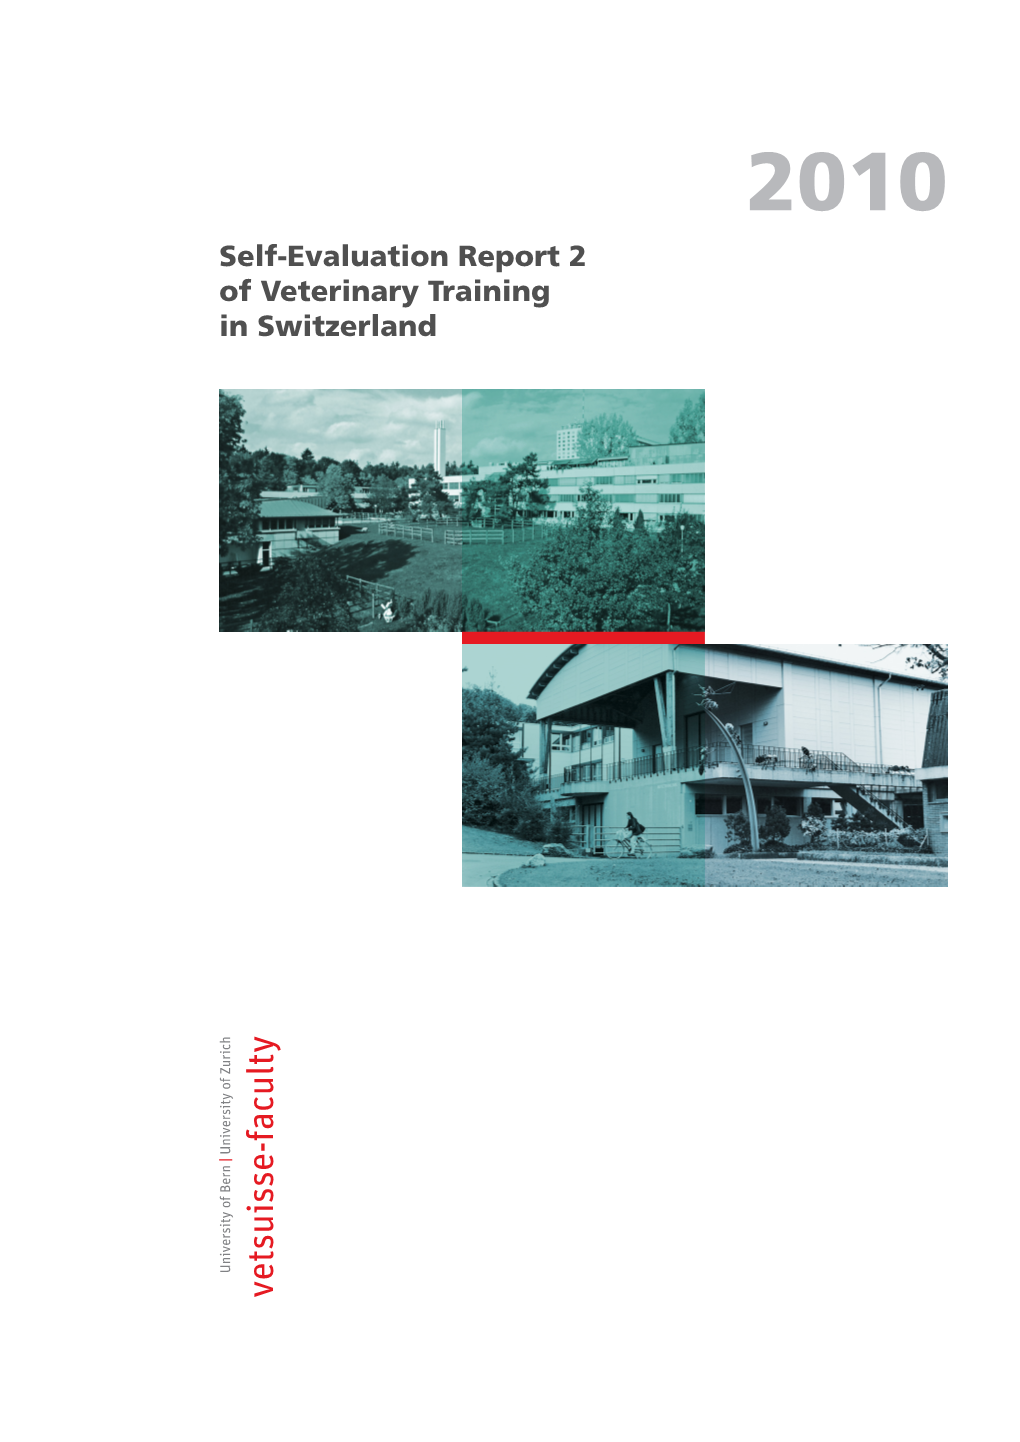 Self-Evaluation Report 2 of Veterinary Training in Switzerland